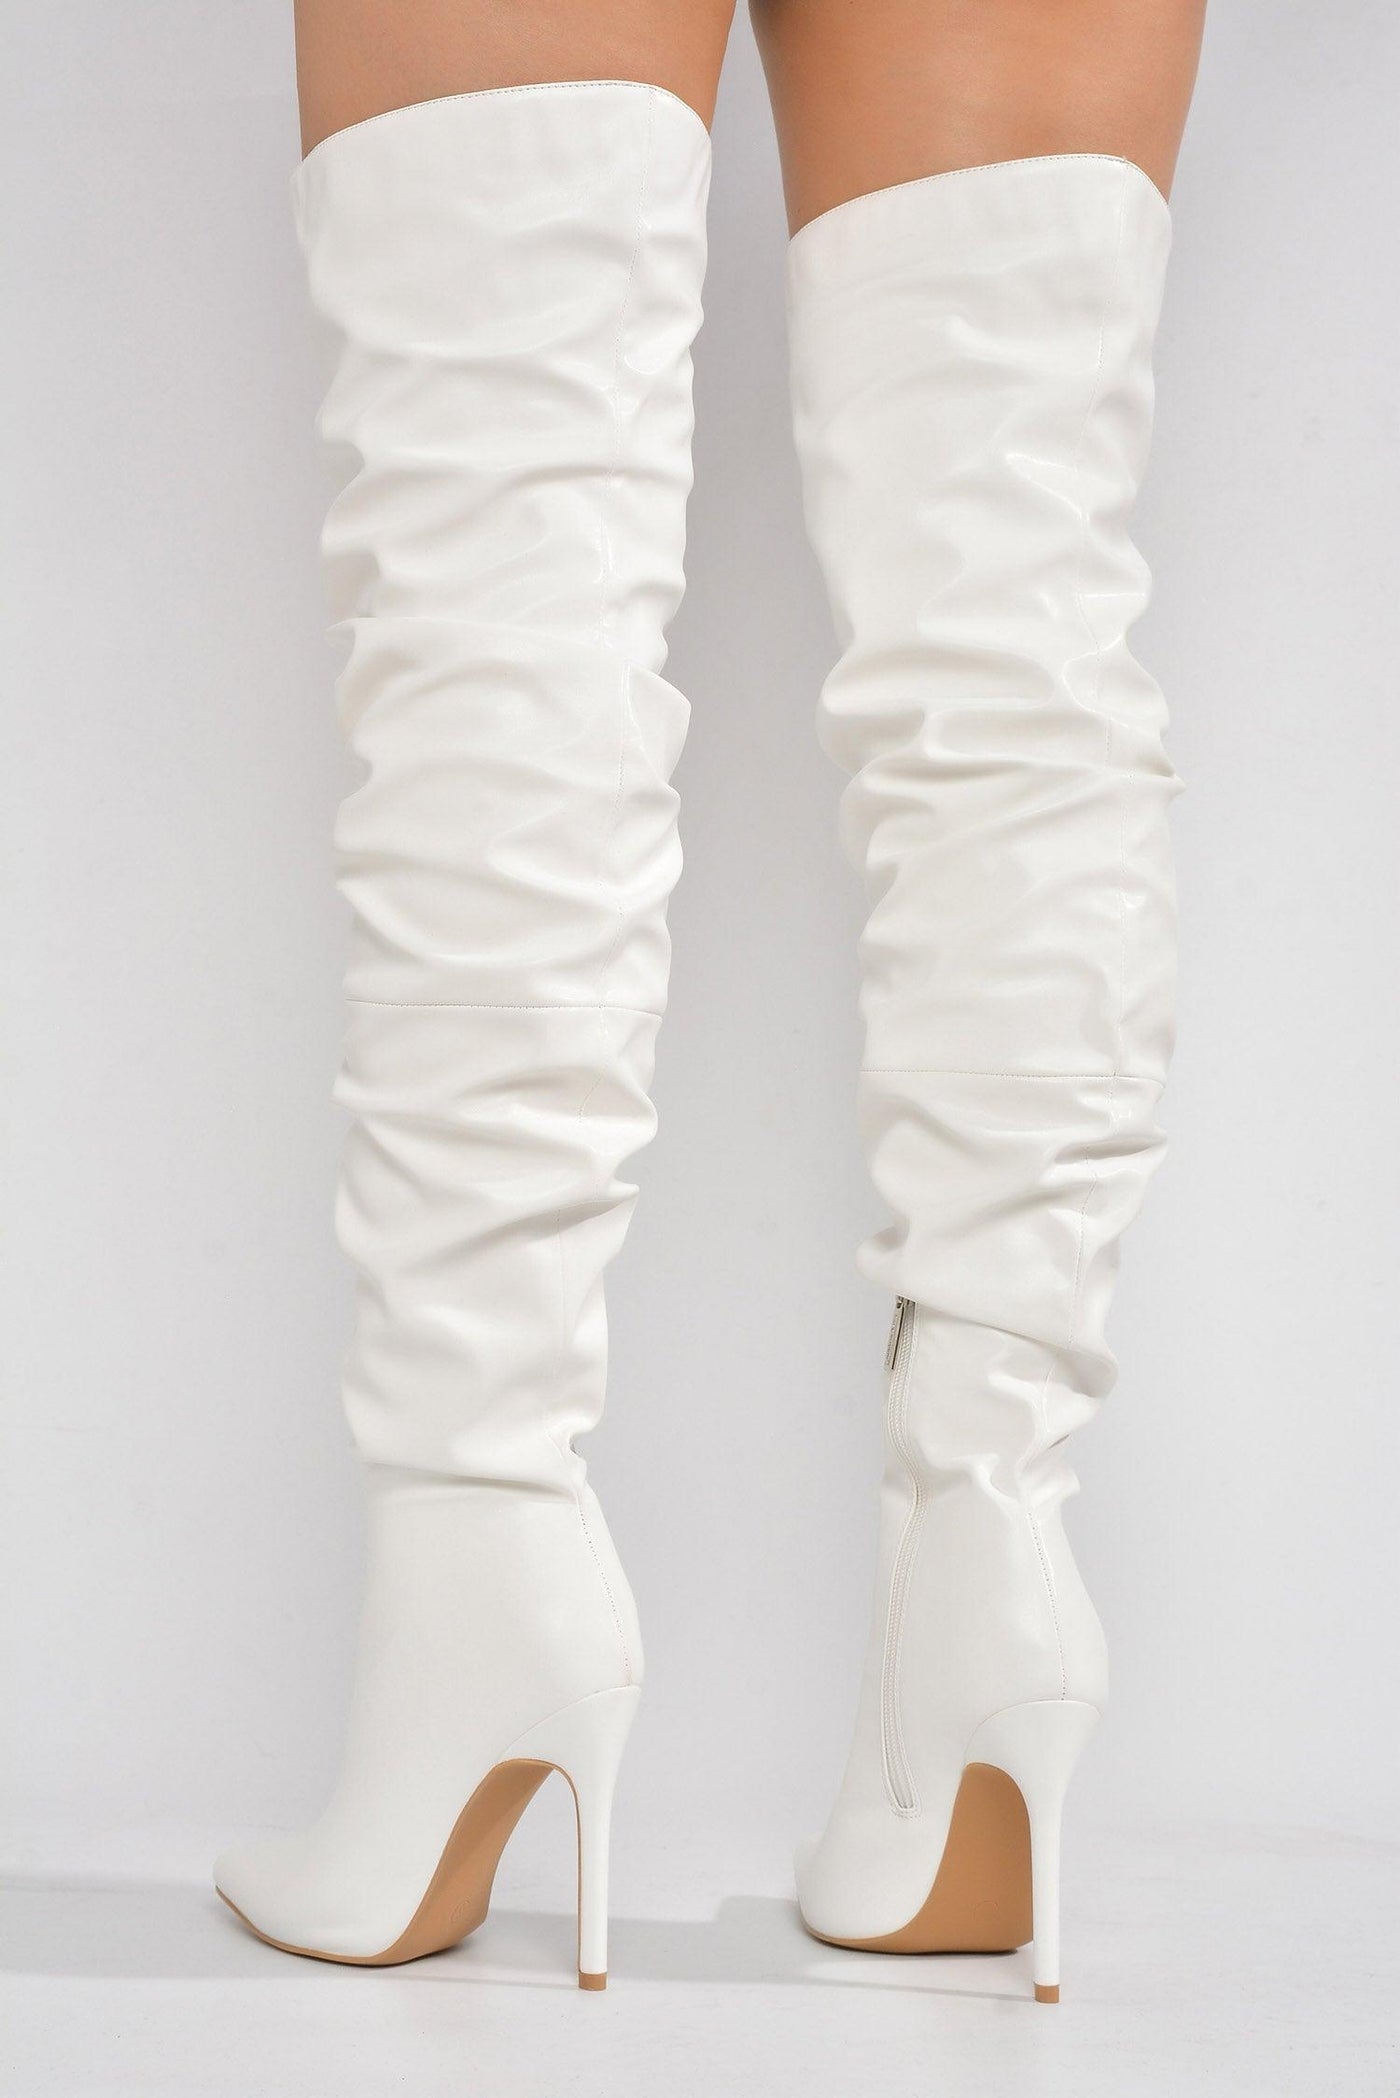 LEEXA - WHITE - AMIClubwear